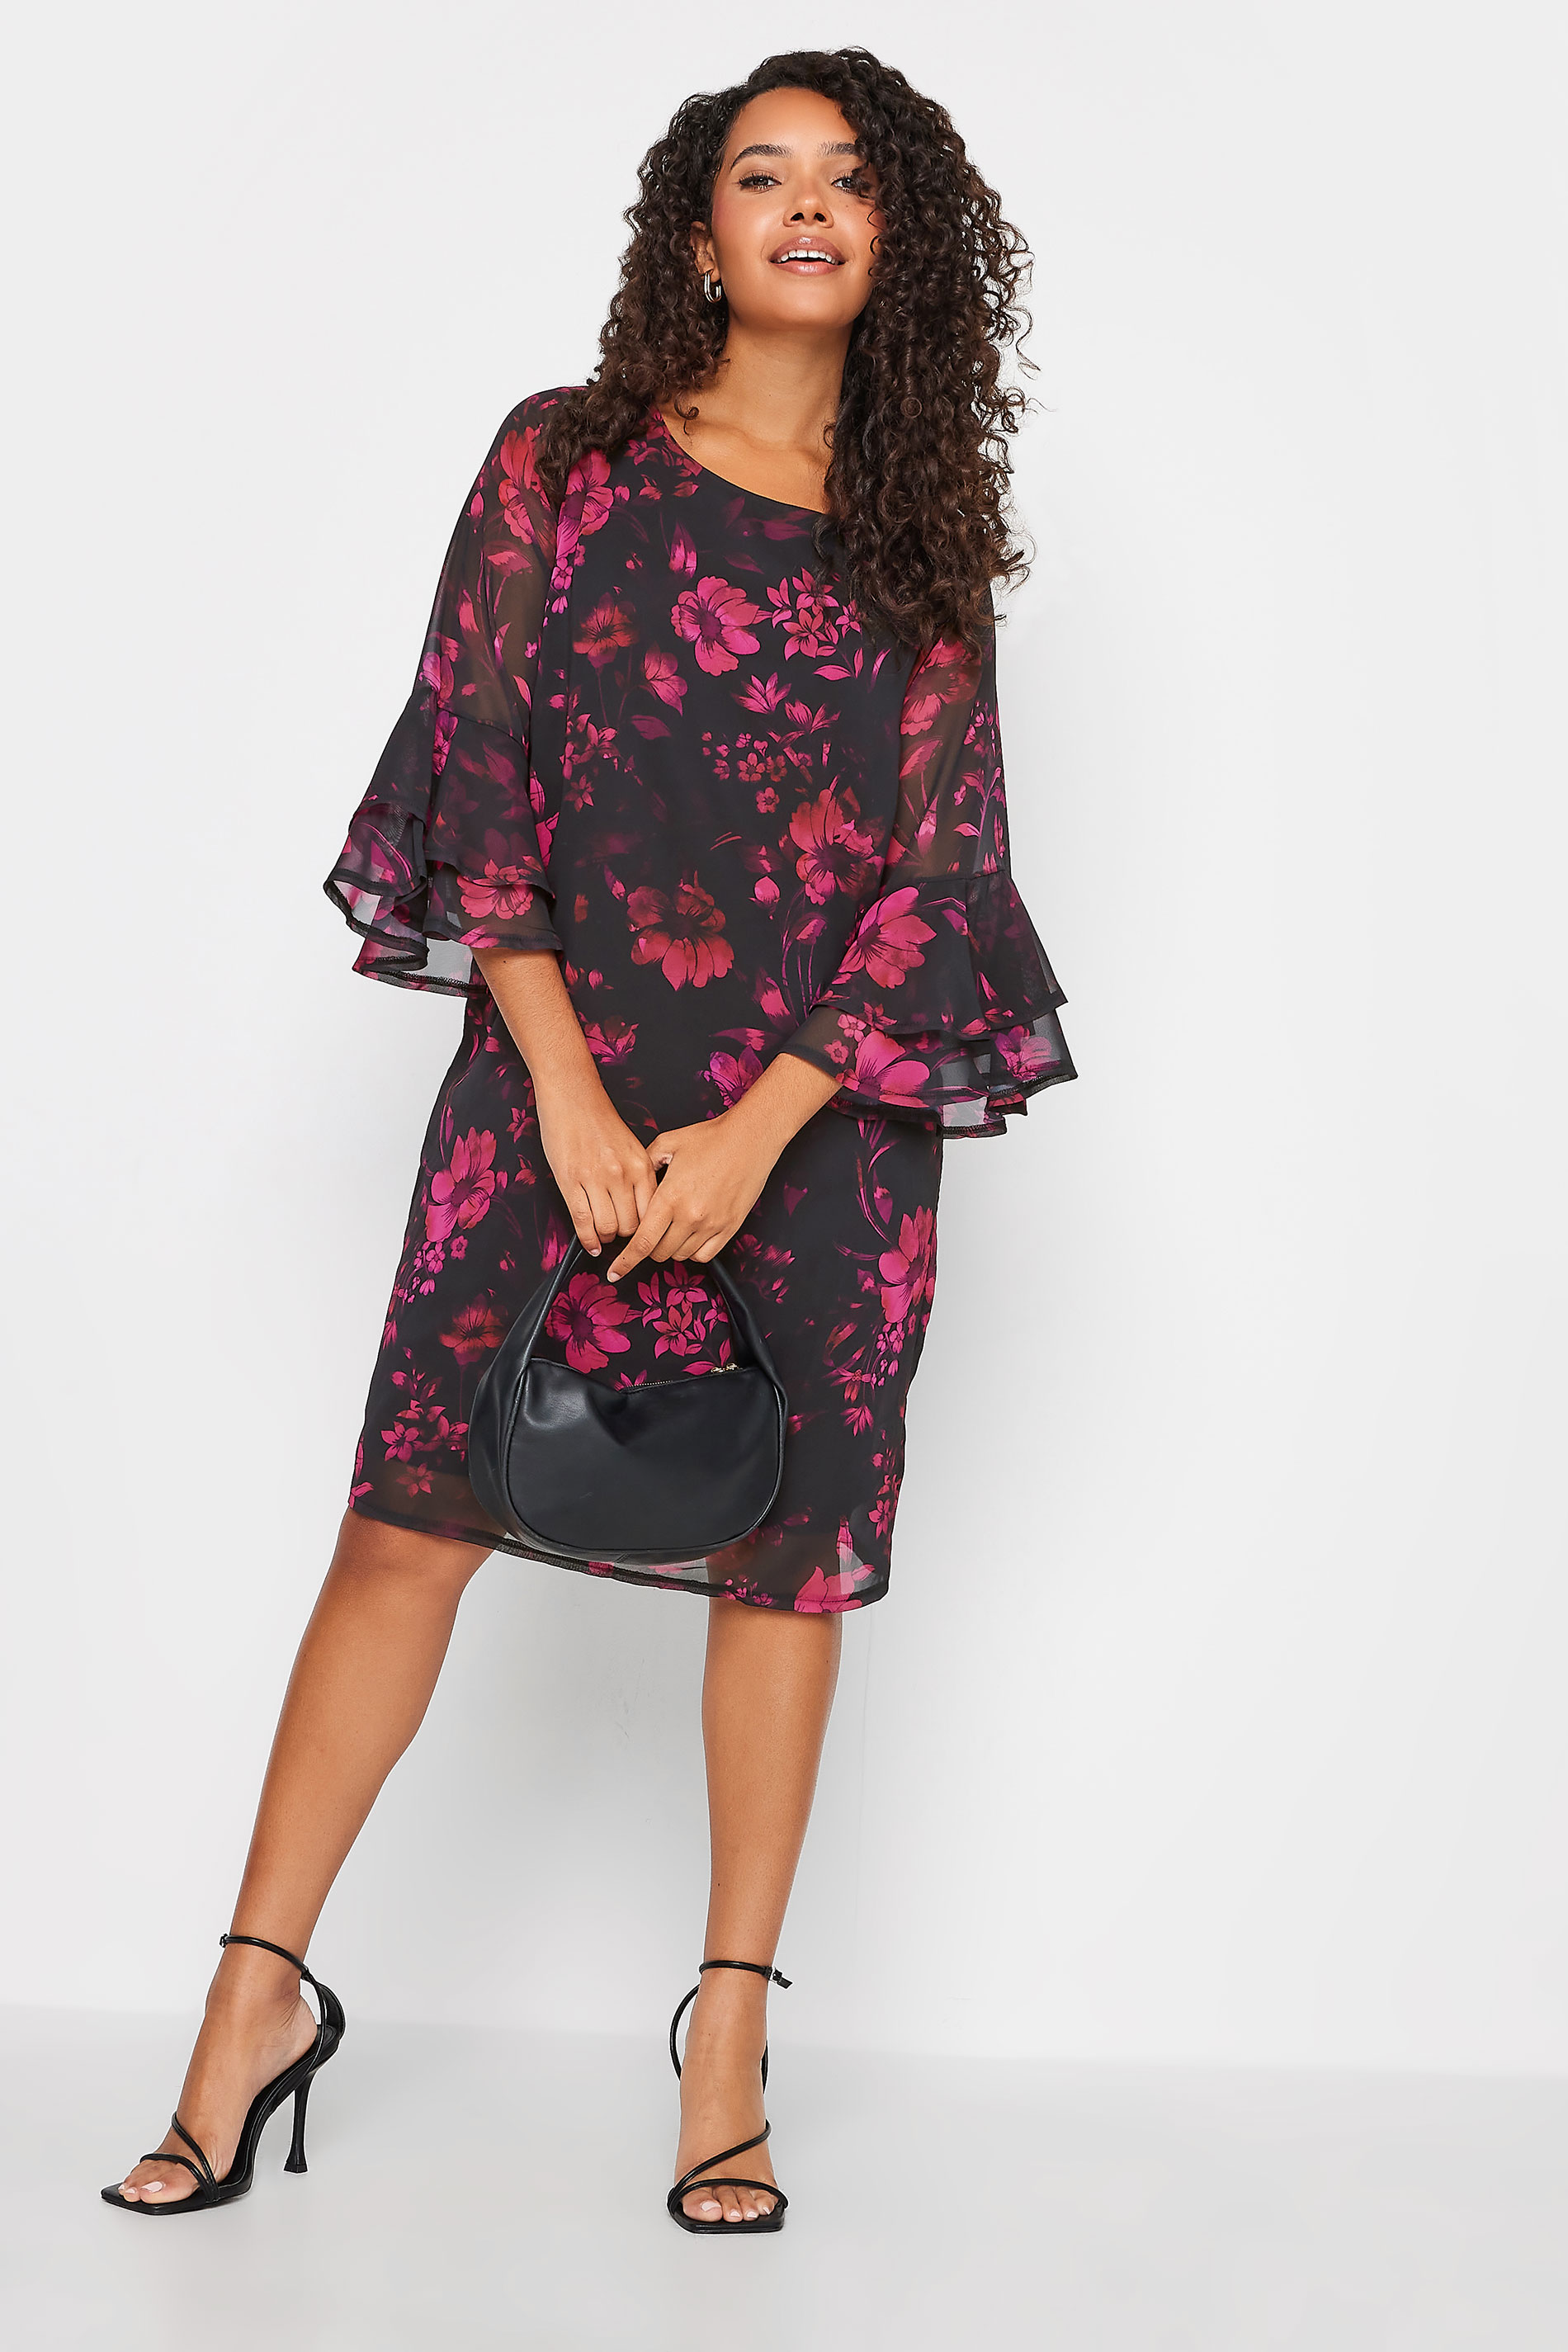 M&Co Black Floral Print Flute Sleeve Shift Dress